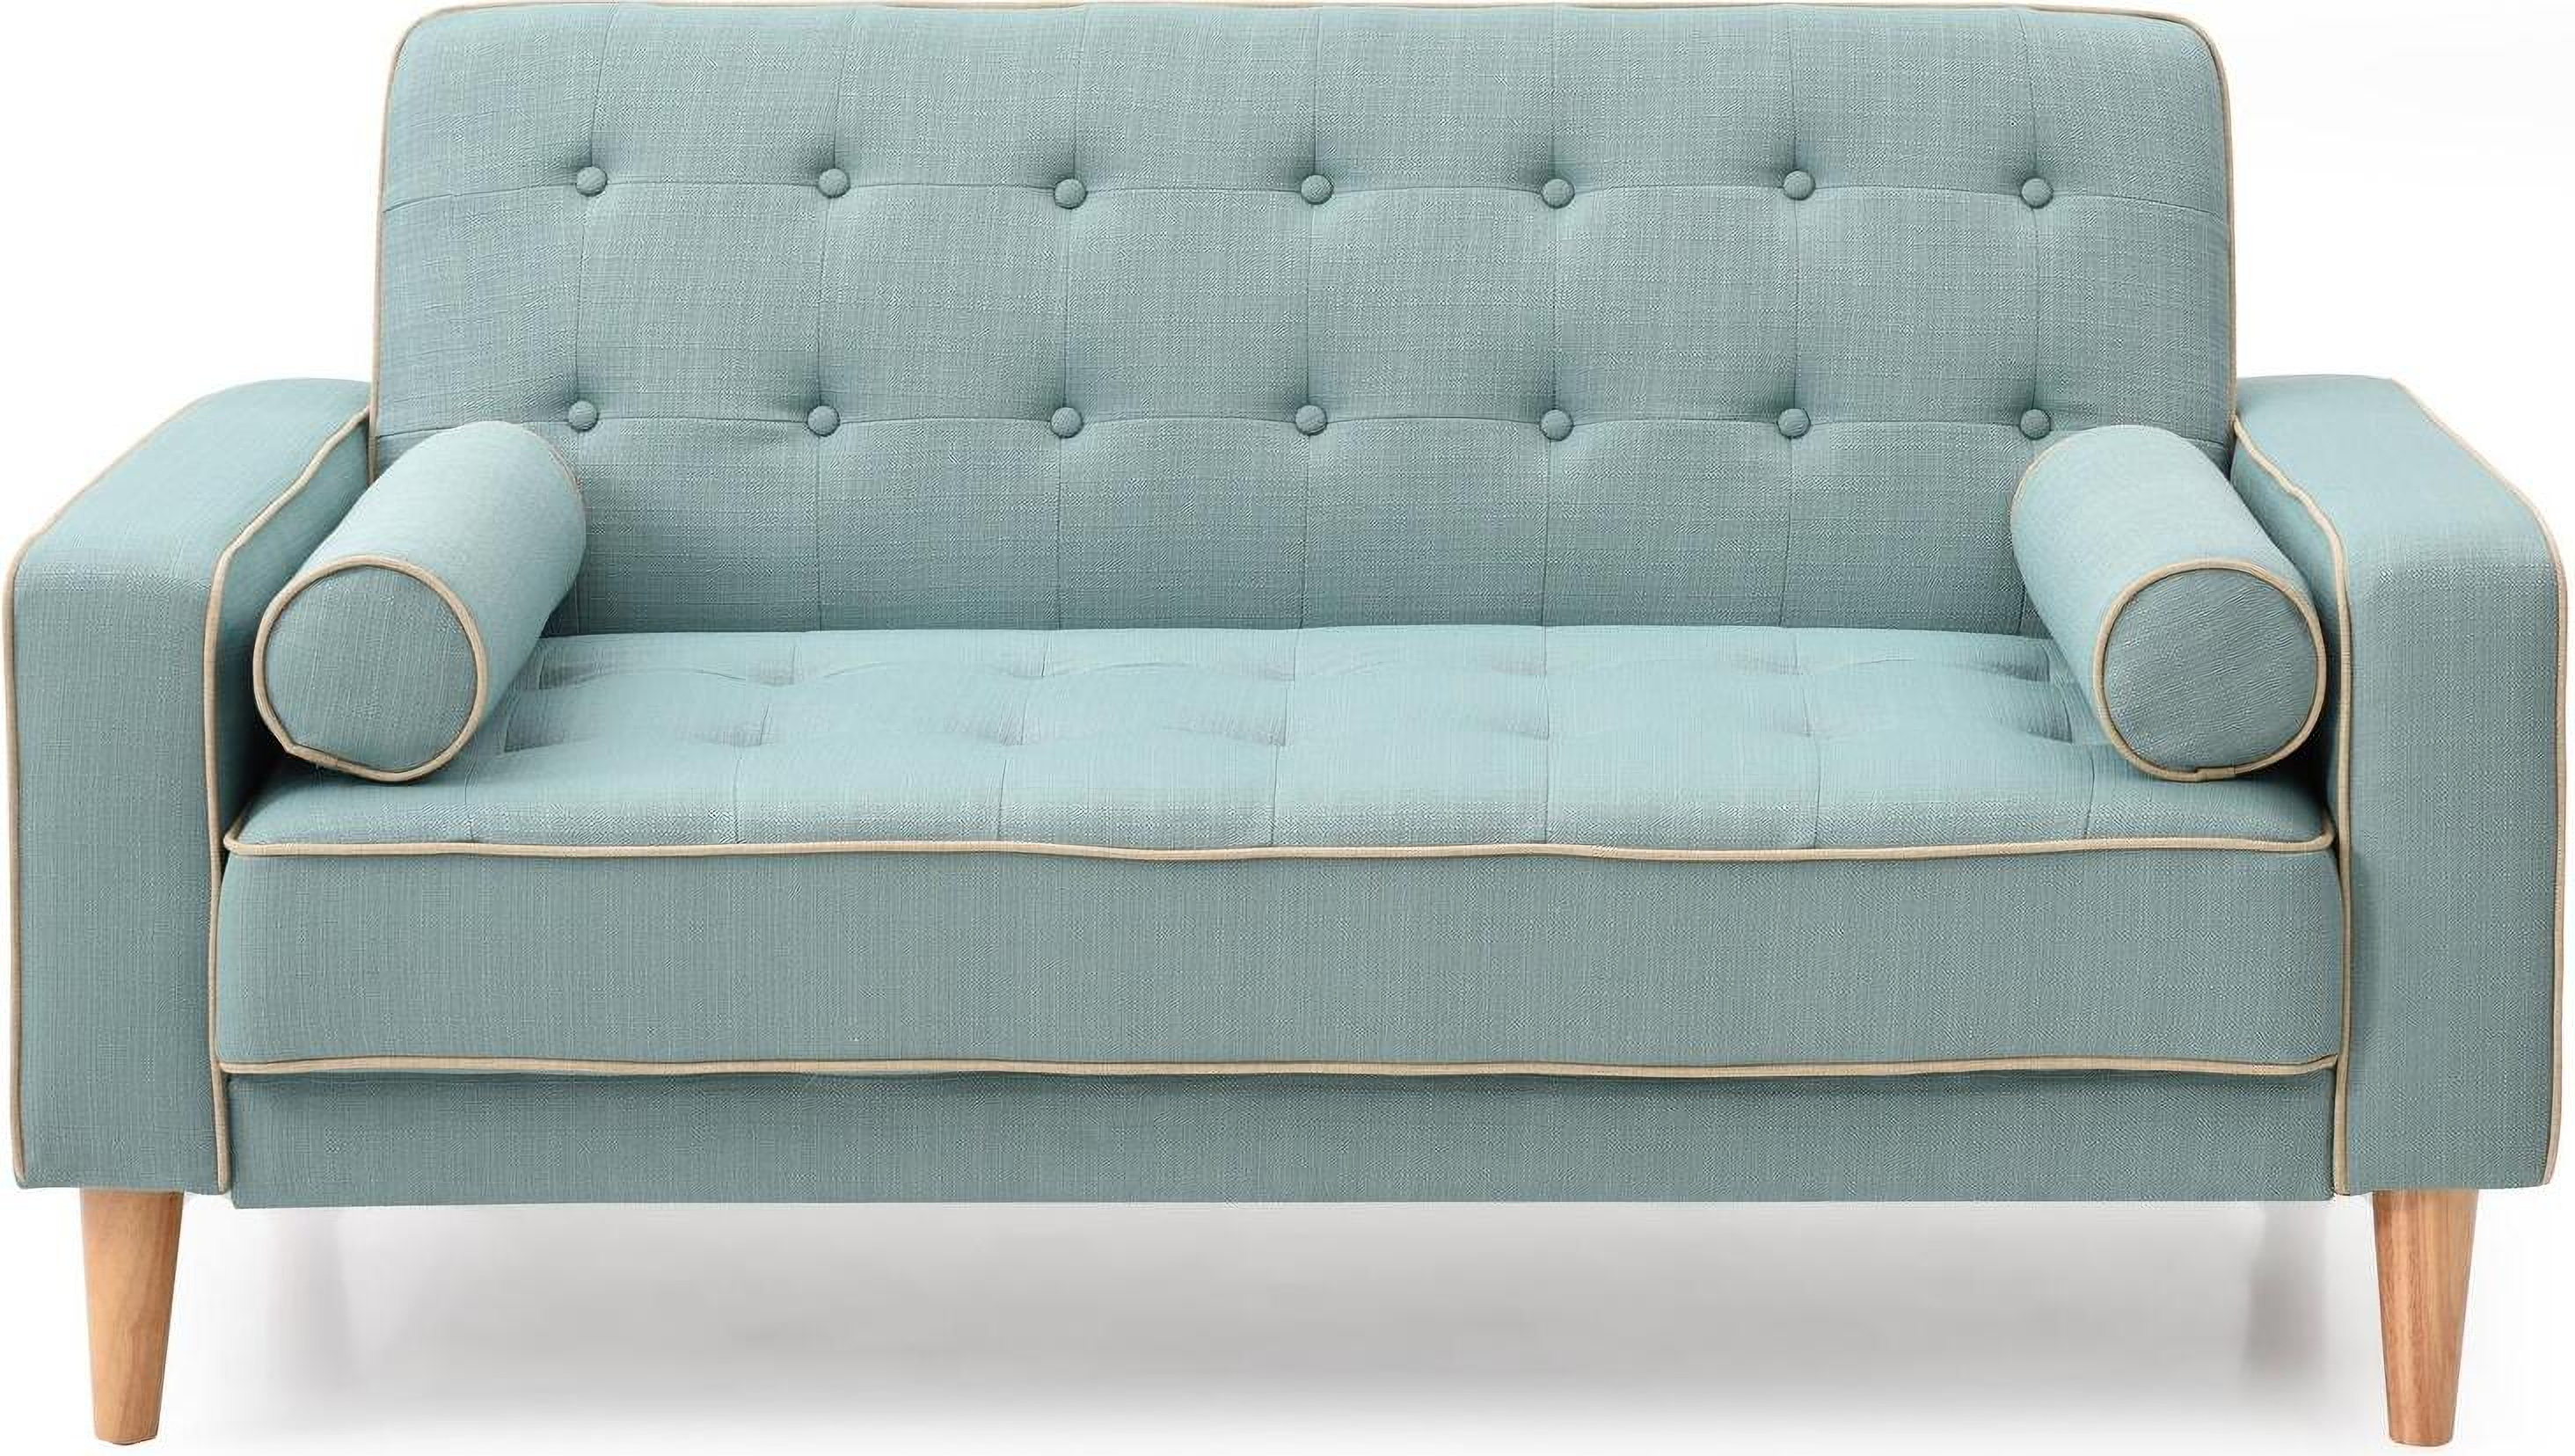 Glory Furniture G833al Navi Series Loveseat Sleeper Fabric Sofa Bed 1stopbedrooms